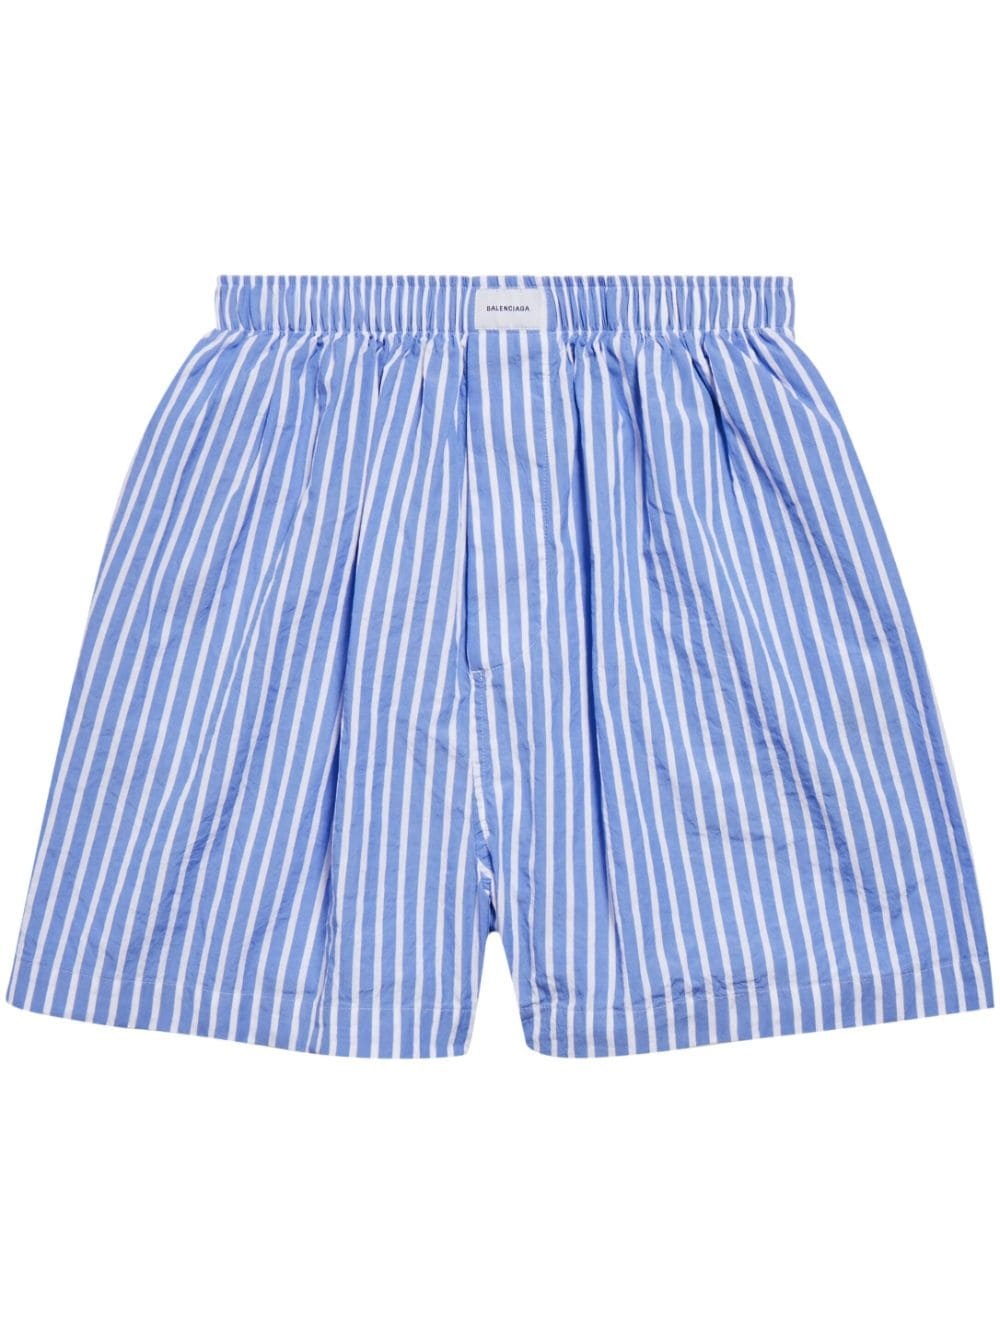 striped cotton shorts - 1